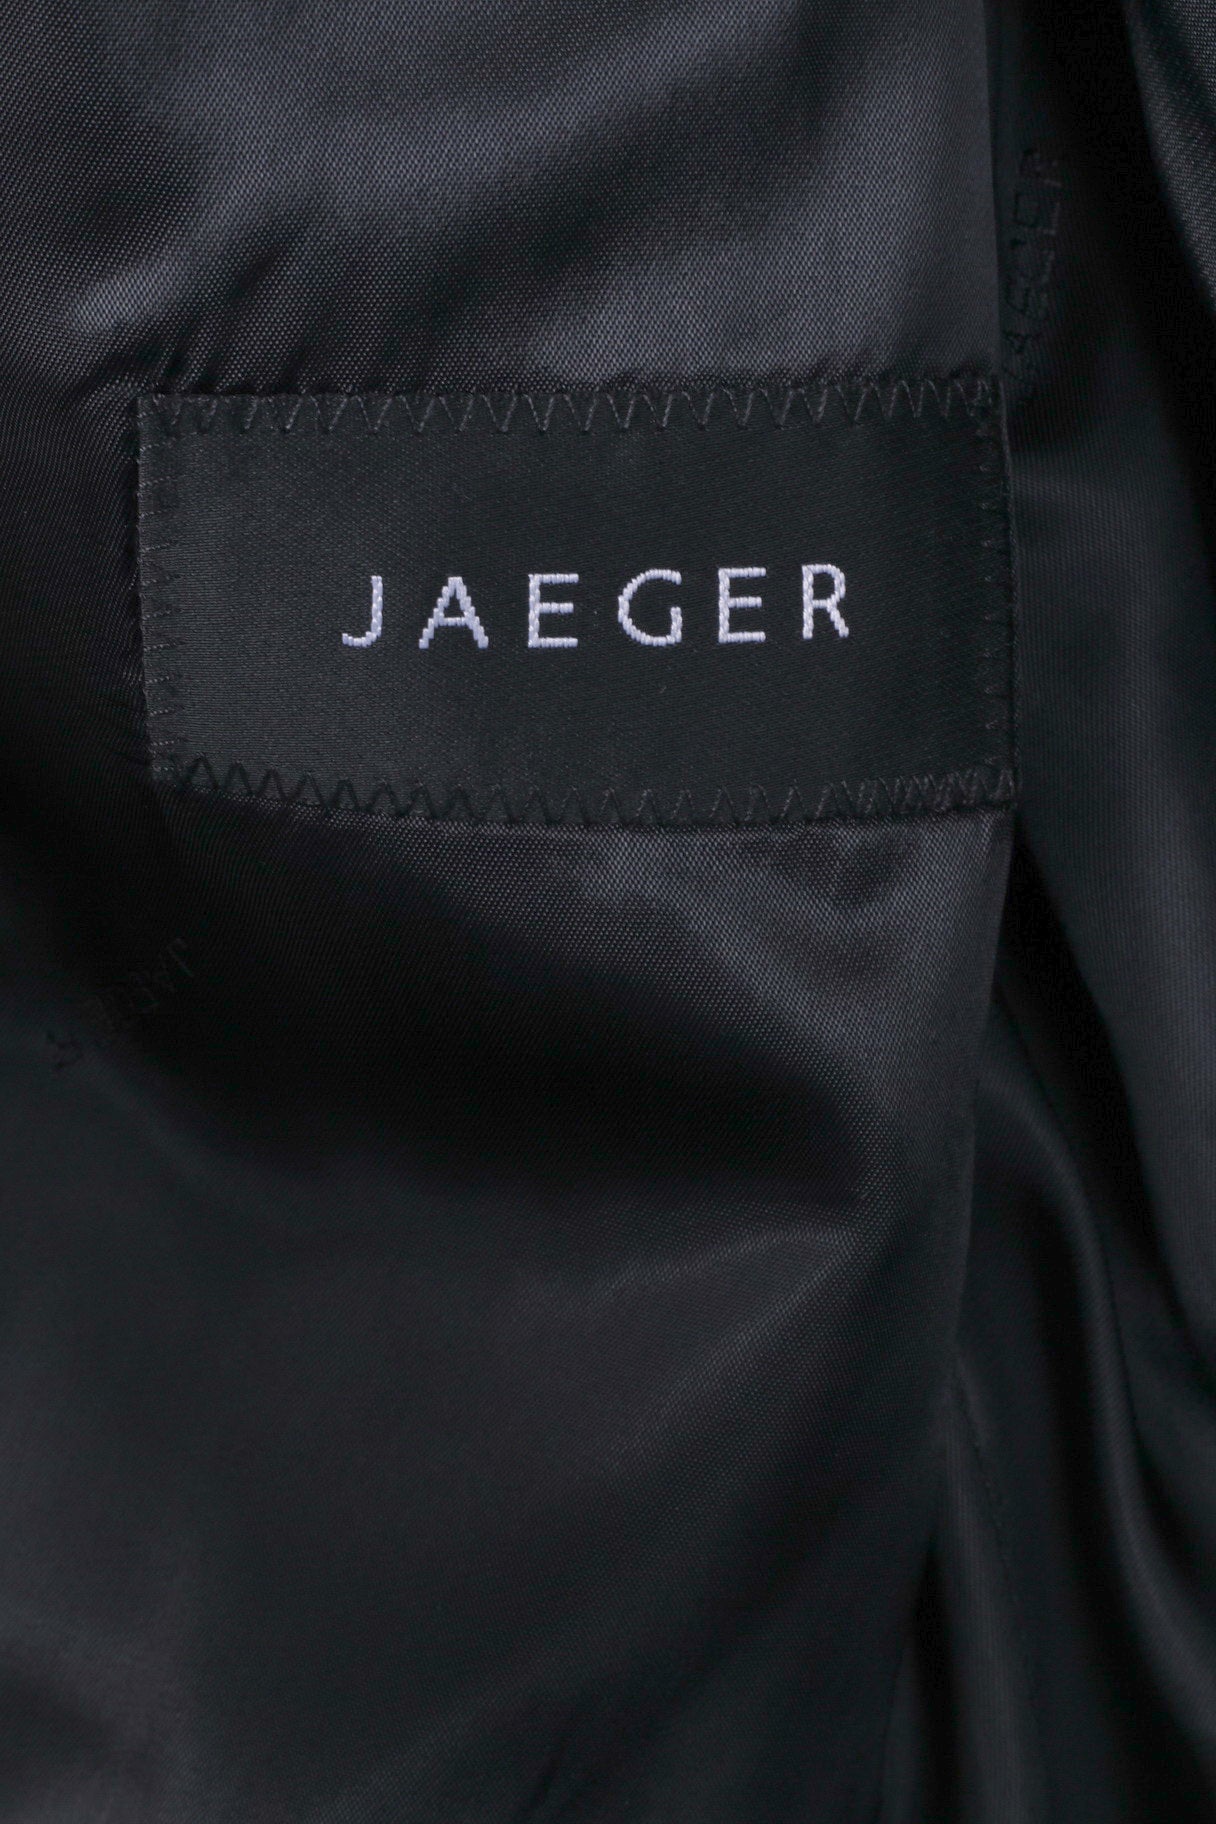 Jaeger Men 40 Long Blazer Grey Single Breasted Top Shoulder Pads 100% Wool Jacket